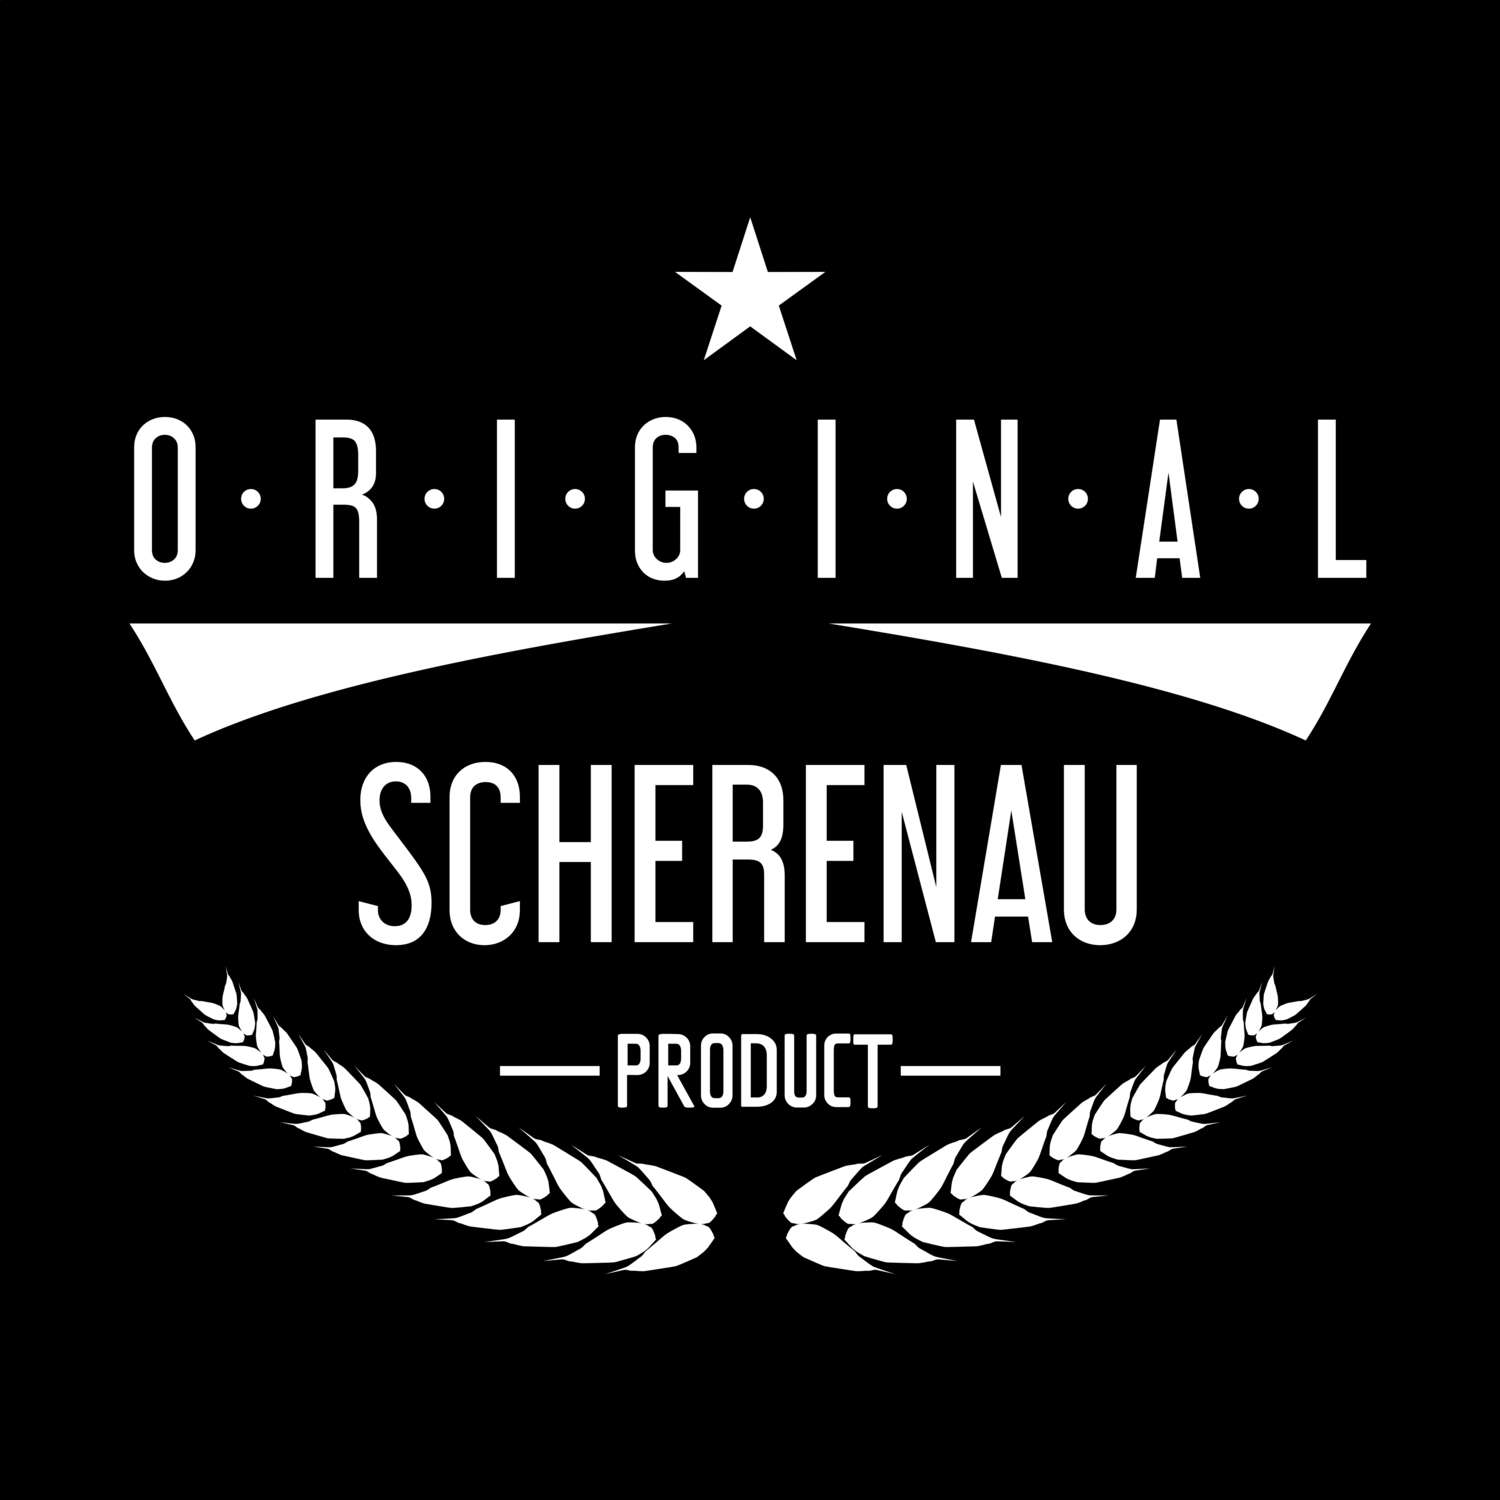 Scherenau T-Shirt »Original Product«